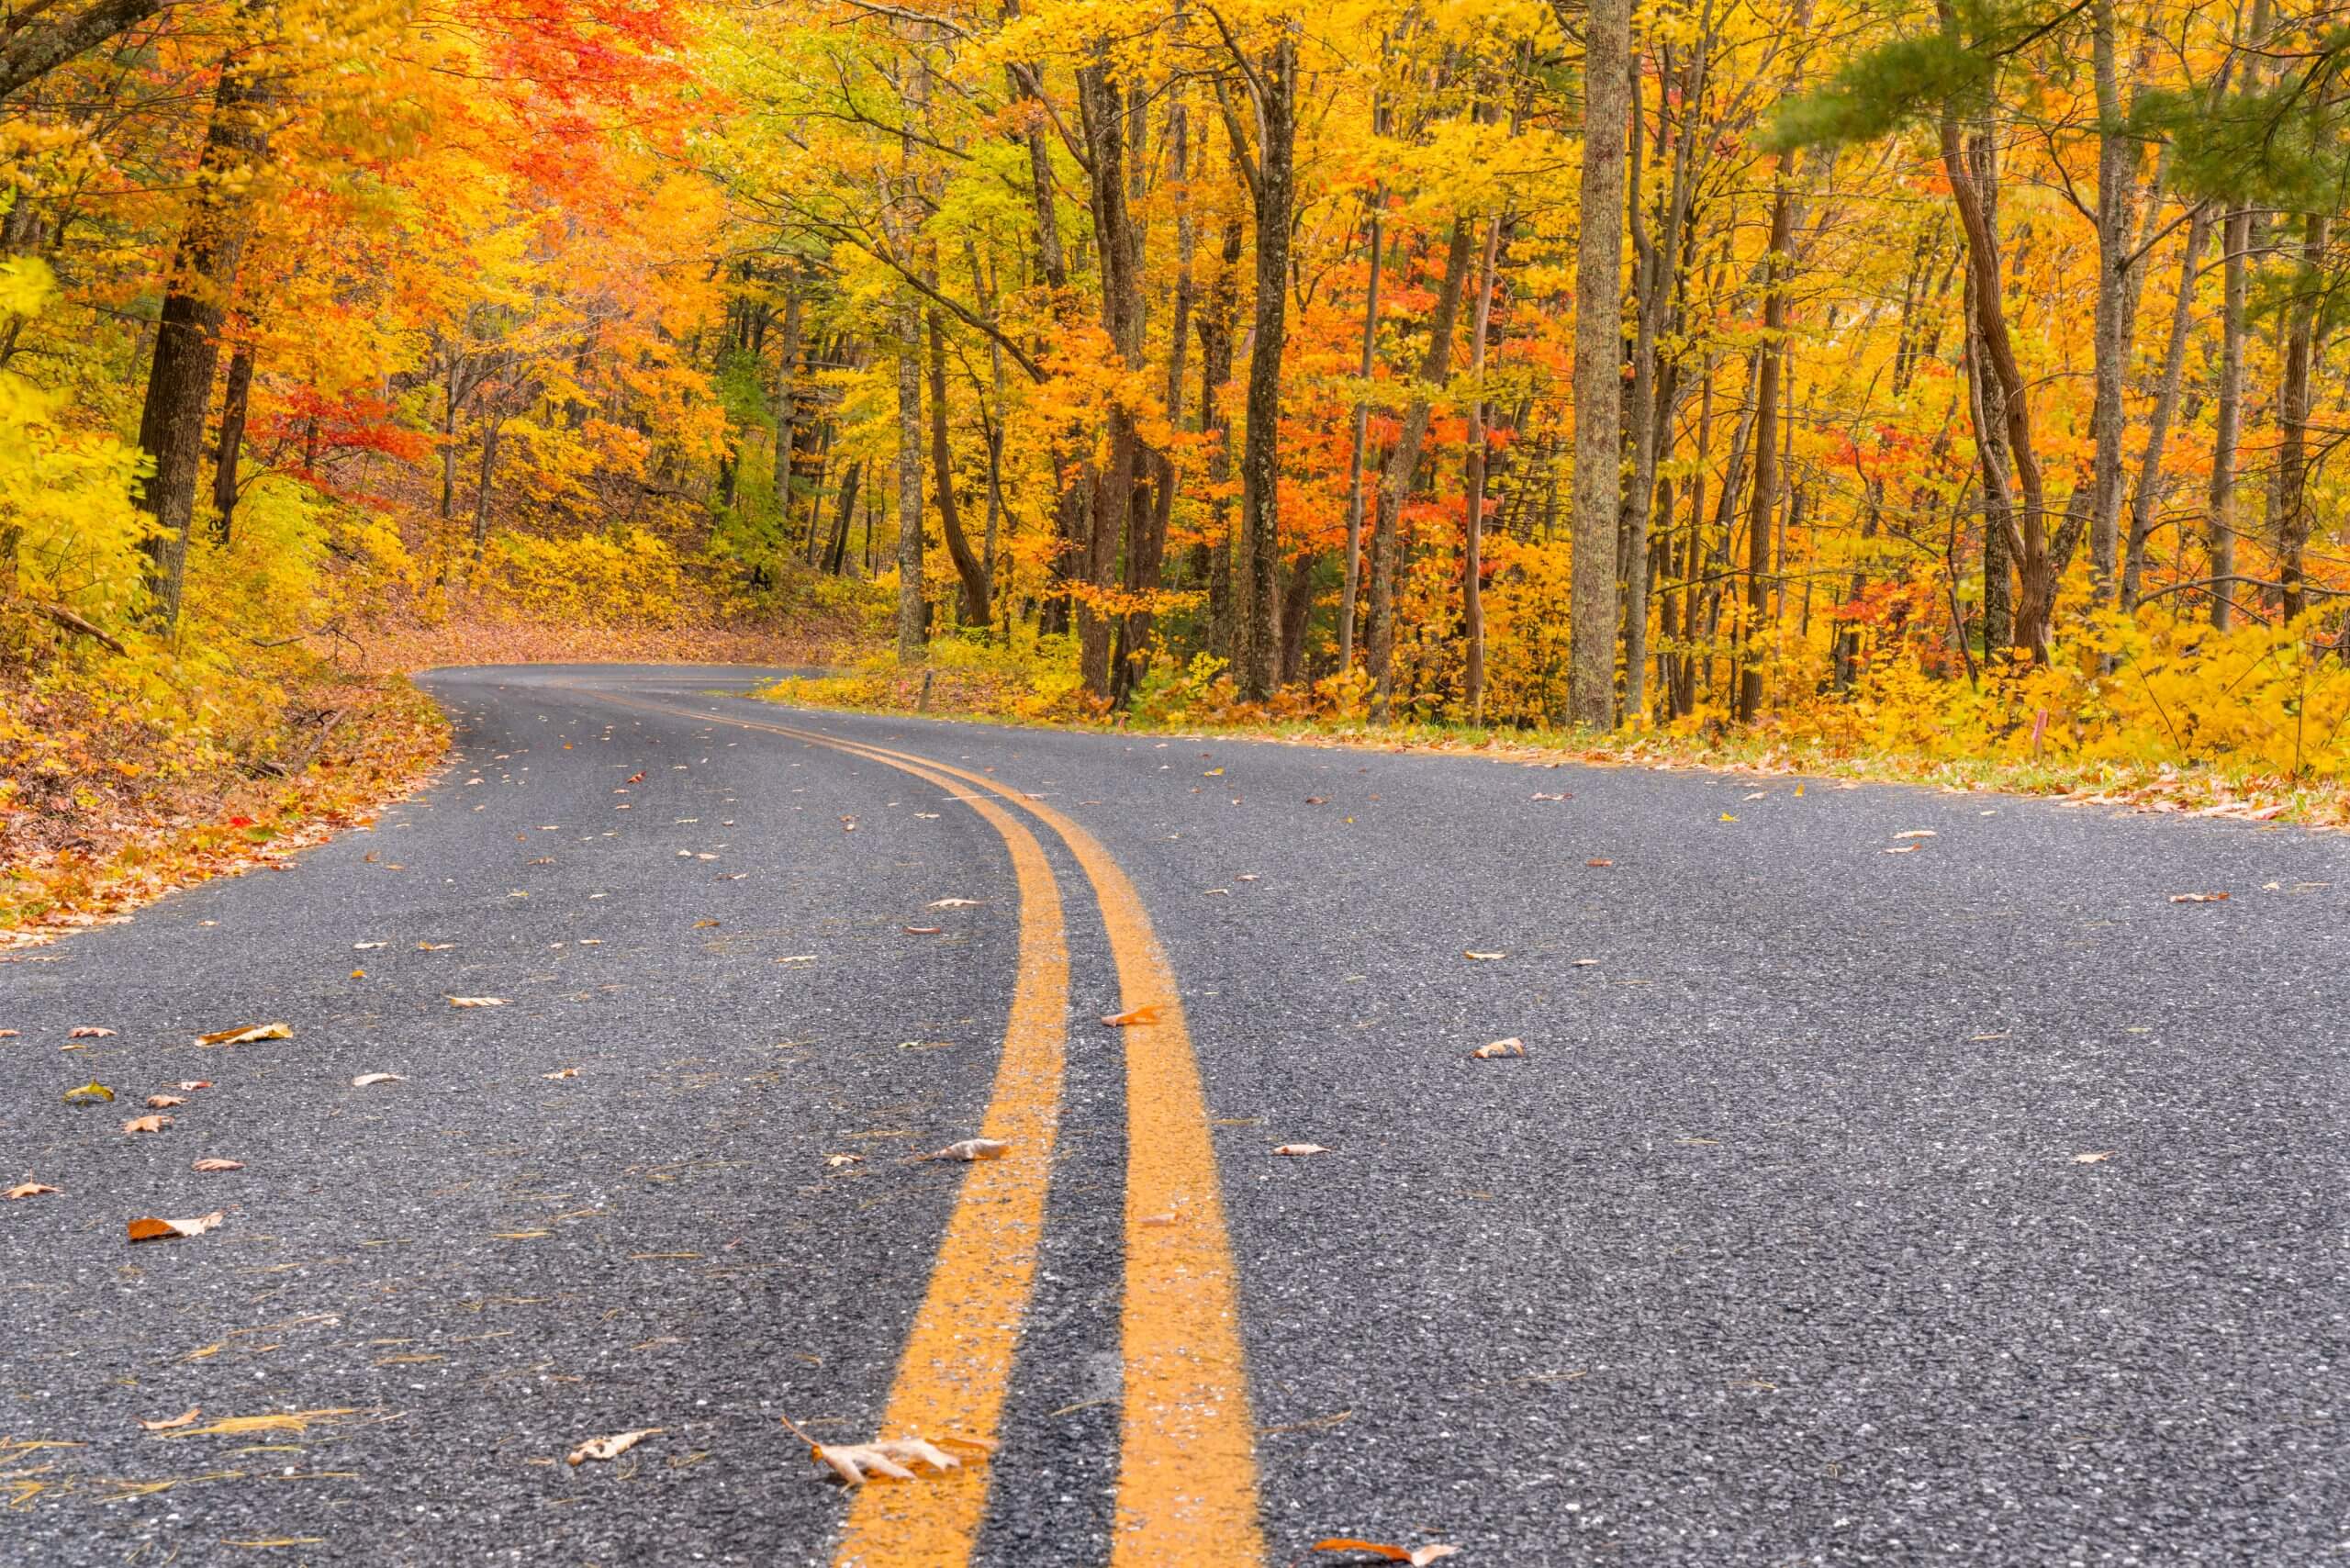 Fall foliage in Shenandoah National Park along the Blue Ridge Parkway